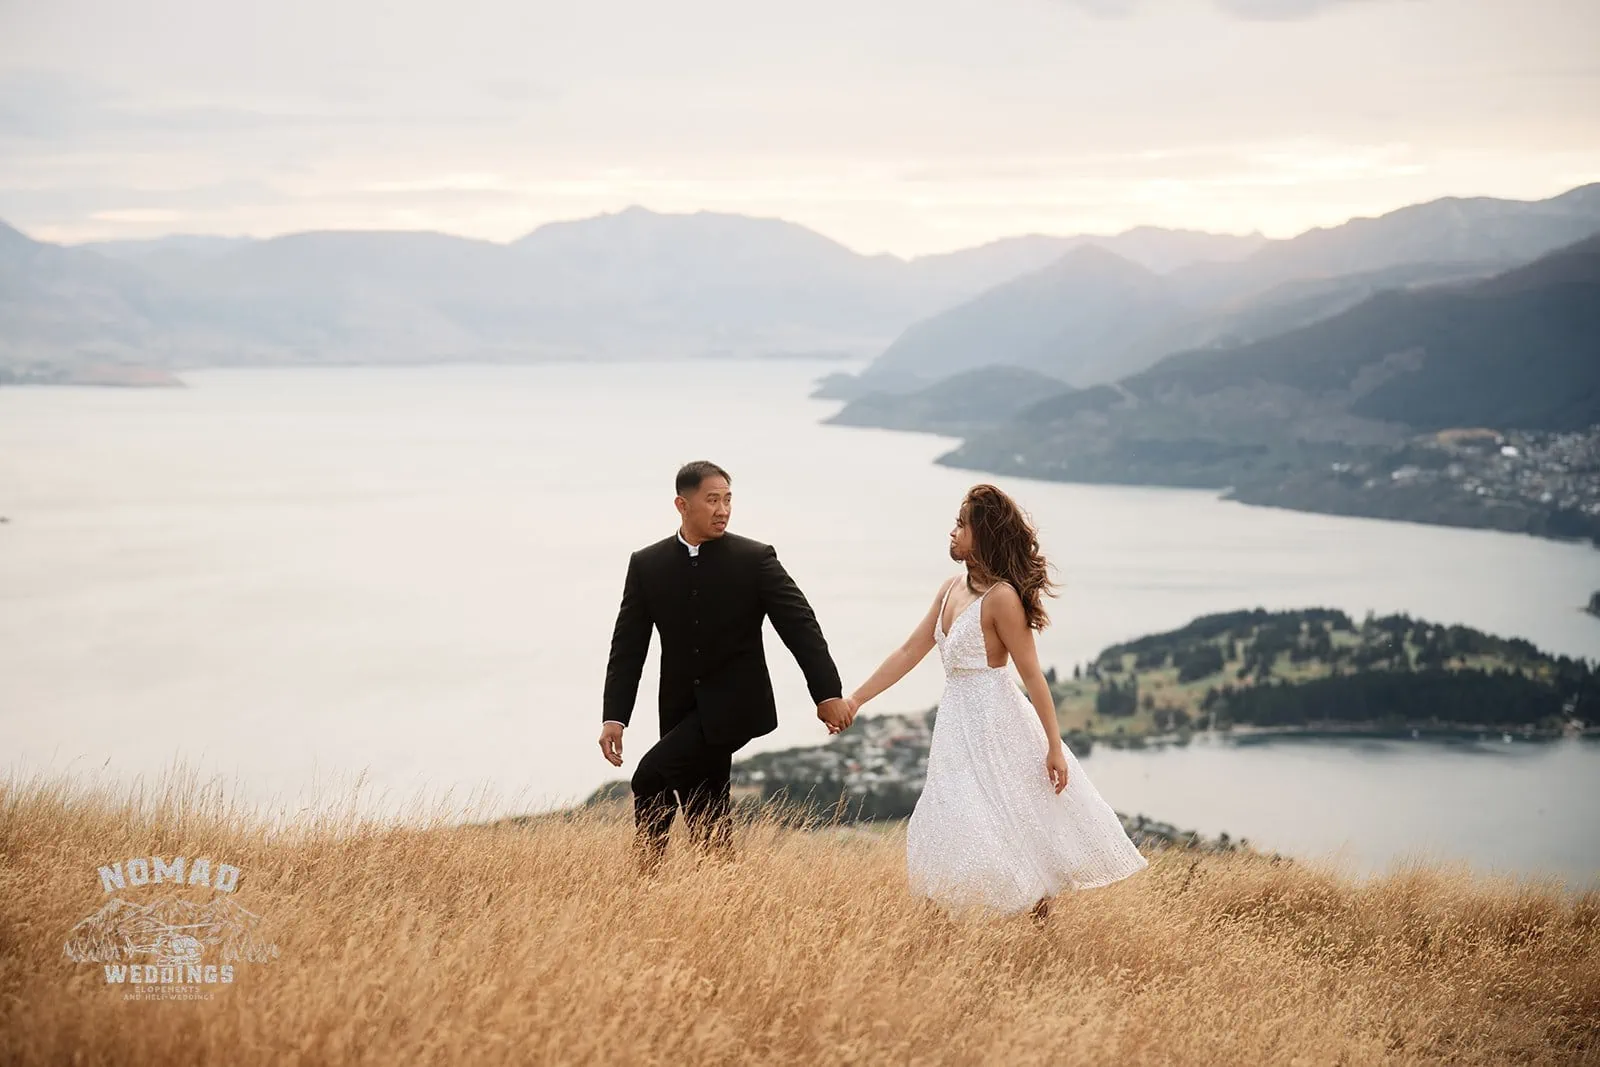 Nhi & Nicholas' pre-wedding shoot on Queenstown's grassy hill overlooking lake Wanaka.